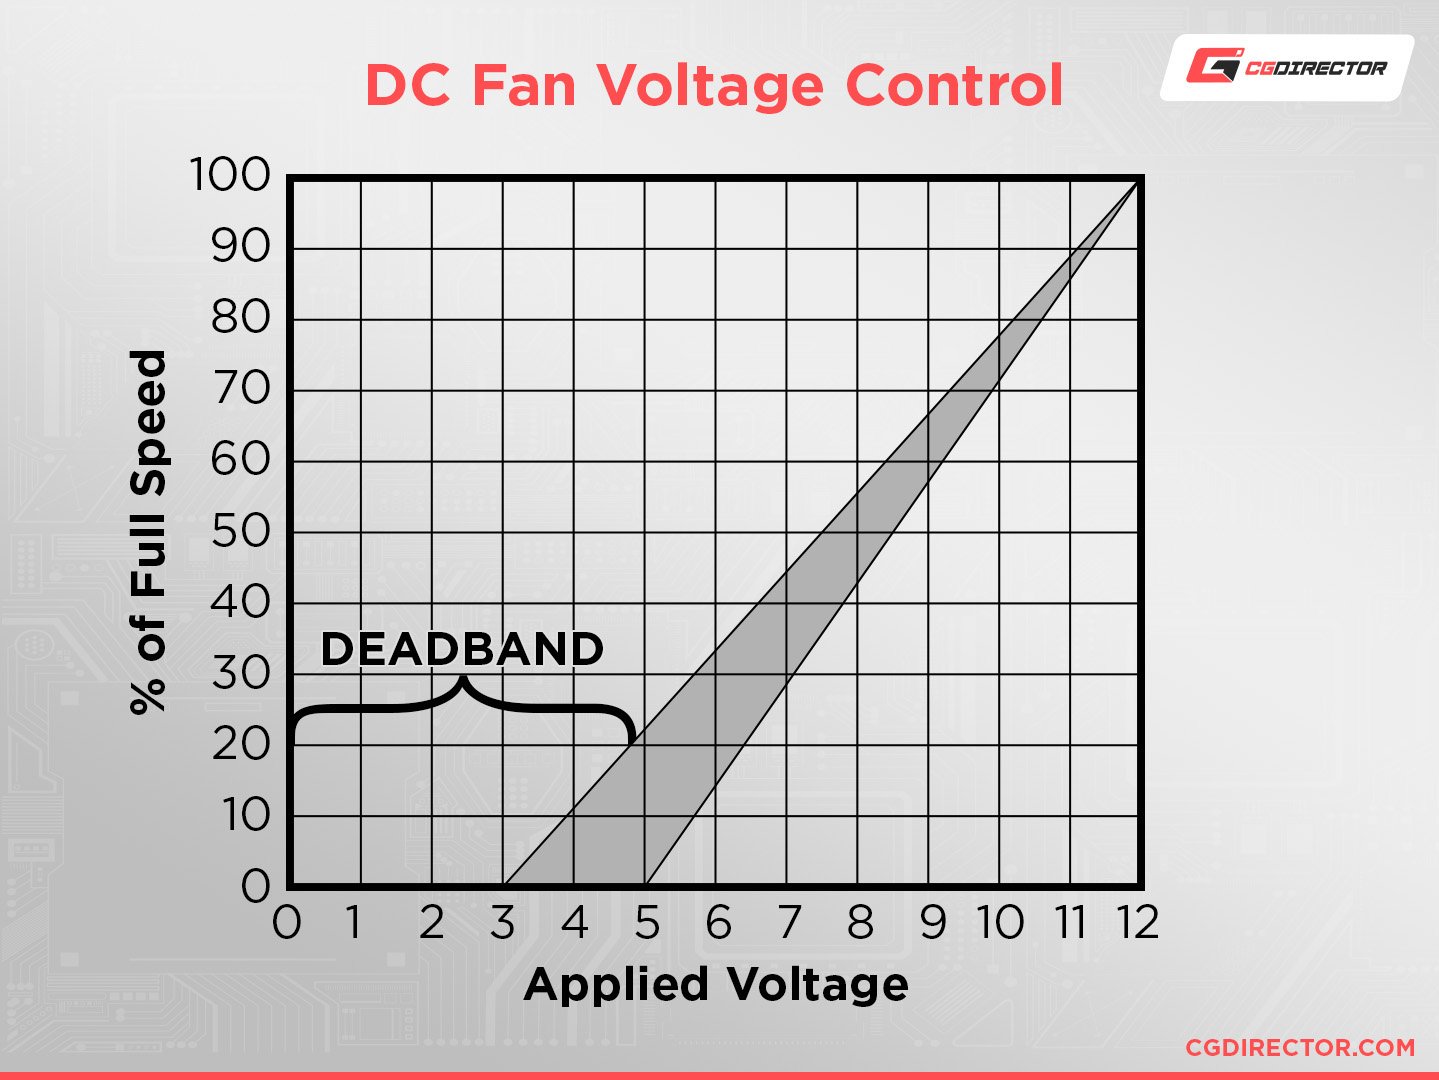 DC Fan Voltage Control